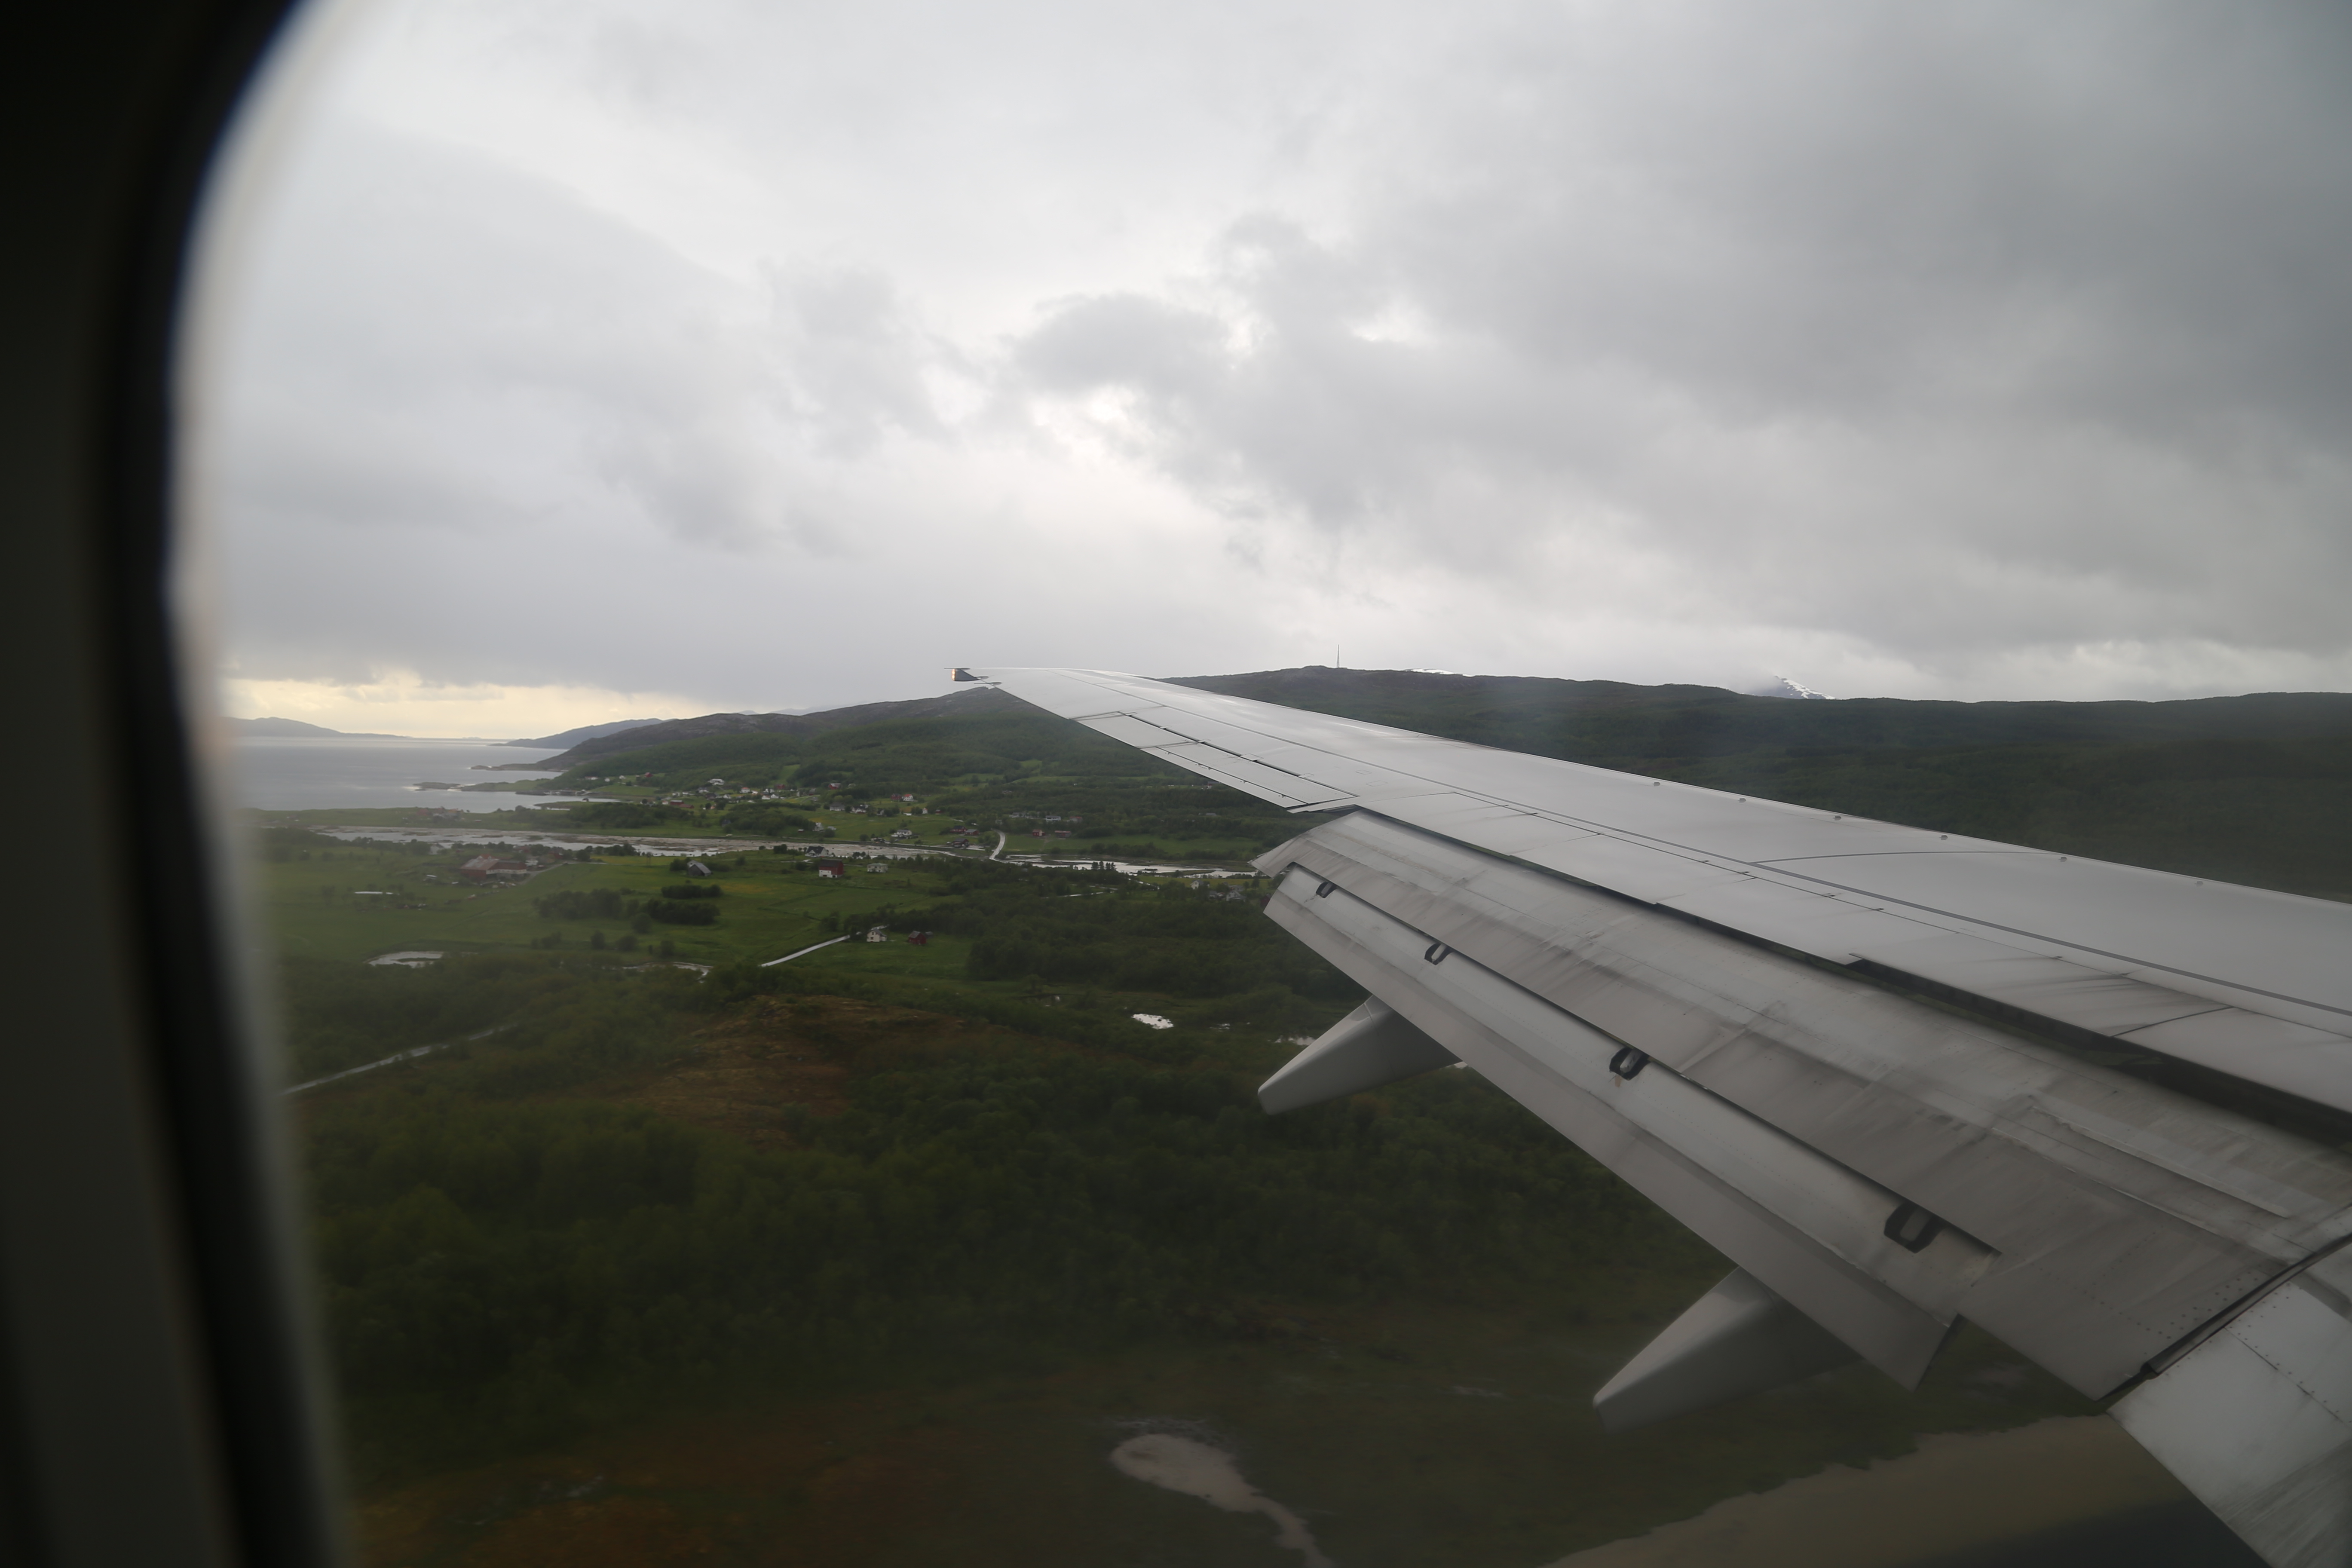 2014 Europe Trip Day 17 - Norway (Legoland Holiday Village, Billund Denmark Airport, Oslo Norway Airport, Harstad / Narvik Evenes Airport, Queen Sonja of Norway (Sonja Haraldsen) on our flight, Harstad Norway, Midnight Sun)